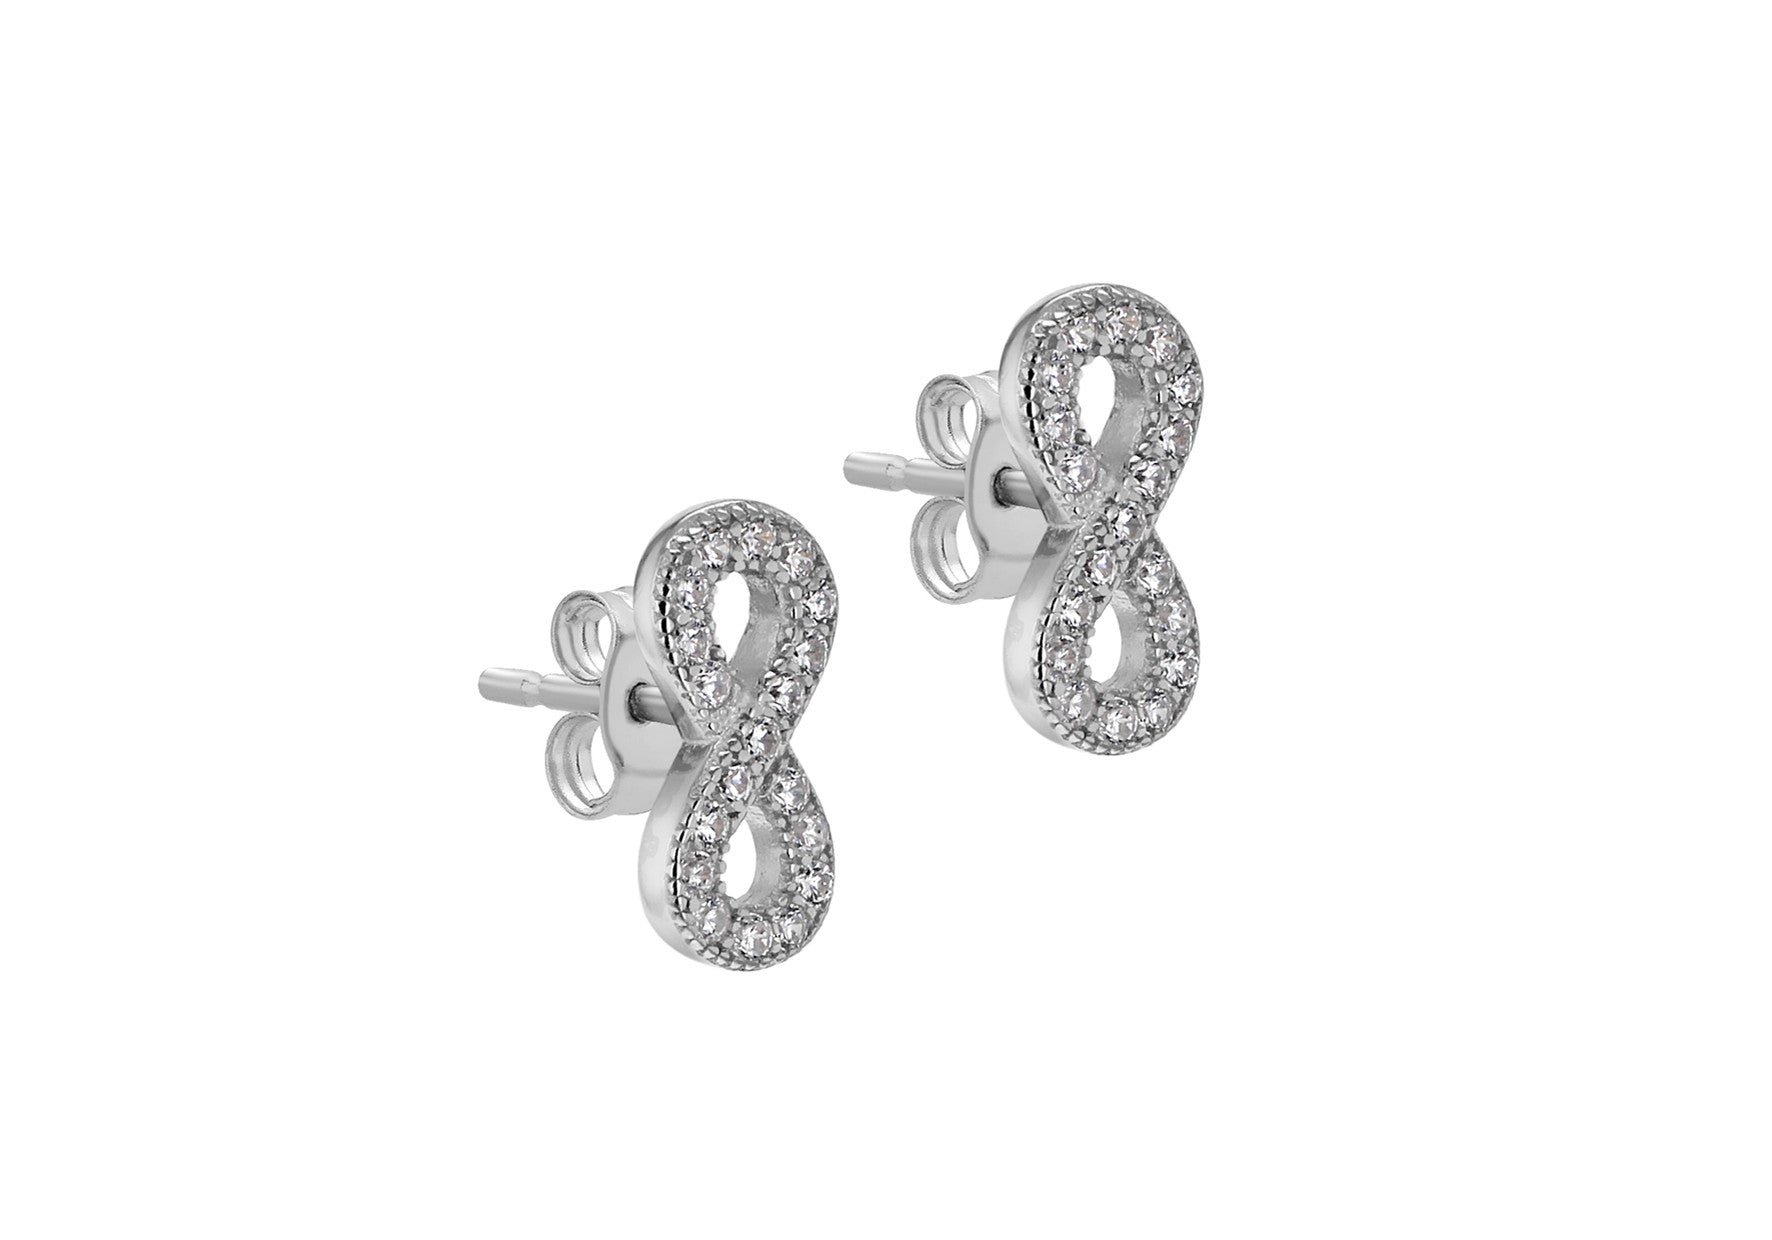 1 Pair Stainless Steel Earrings Infinity Sign Earrings Fashion Stud Earrings  Classic Simple Earrings For Women Jewelry Wedding Party  SHEIN USA